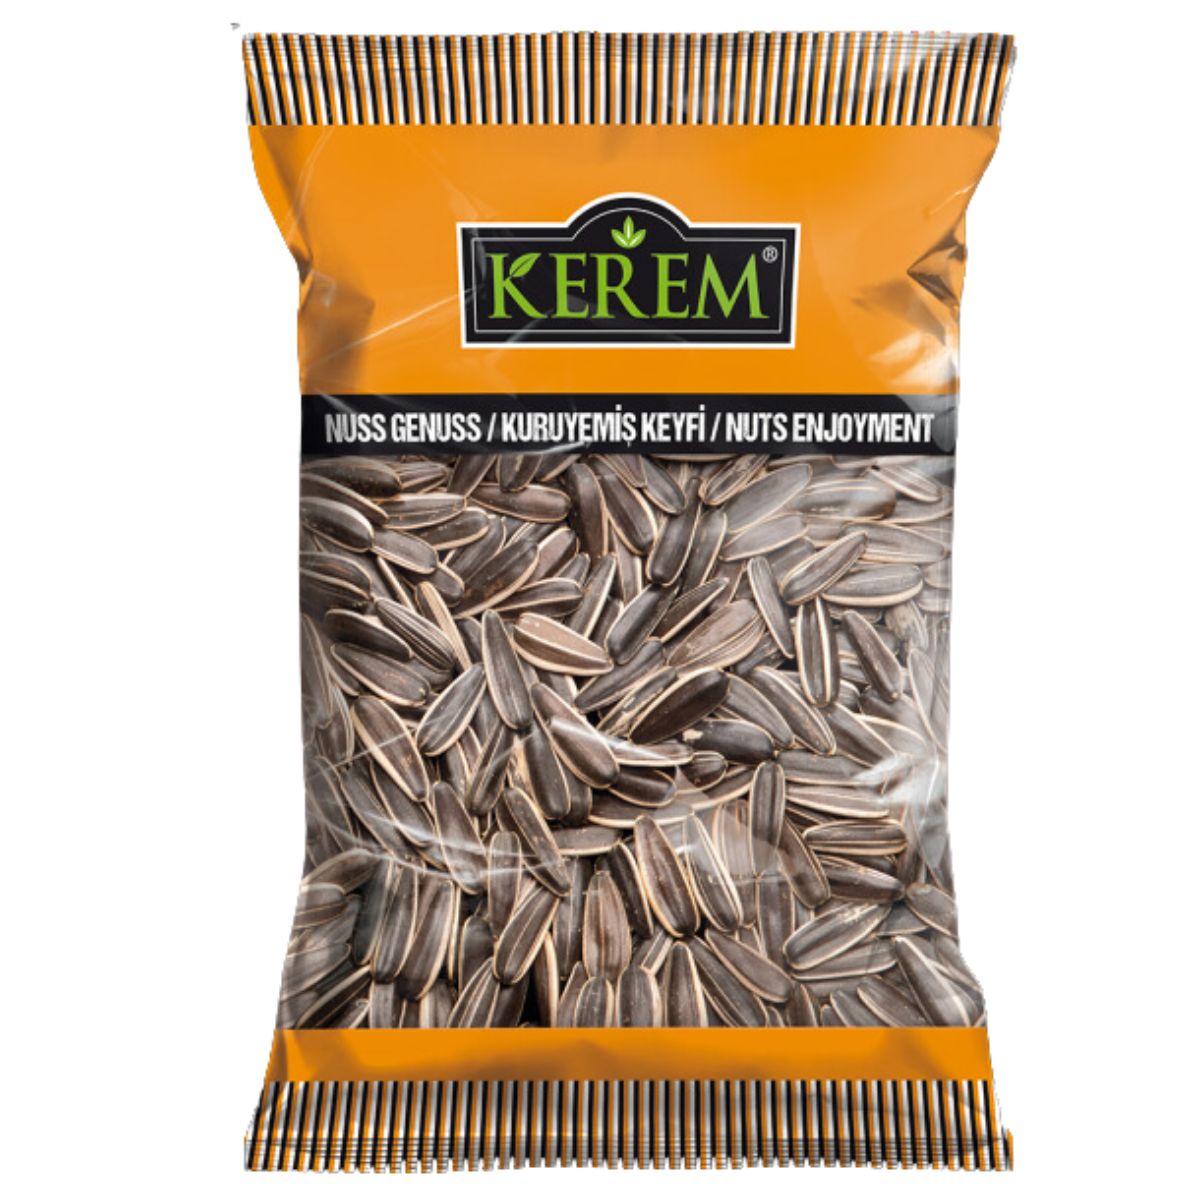 A package of Kerem - Dakota Sunflower Seeds Unsalted - 200g with text indicating "nuss genuss / kuruyemiş keyfi / nuts enjoyment.